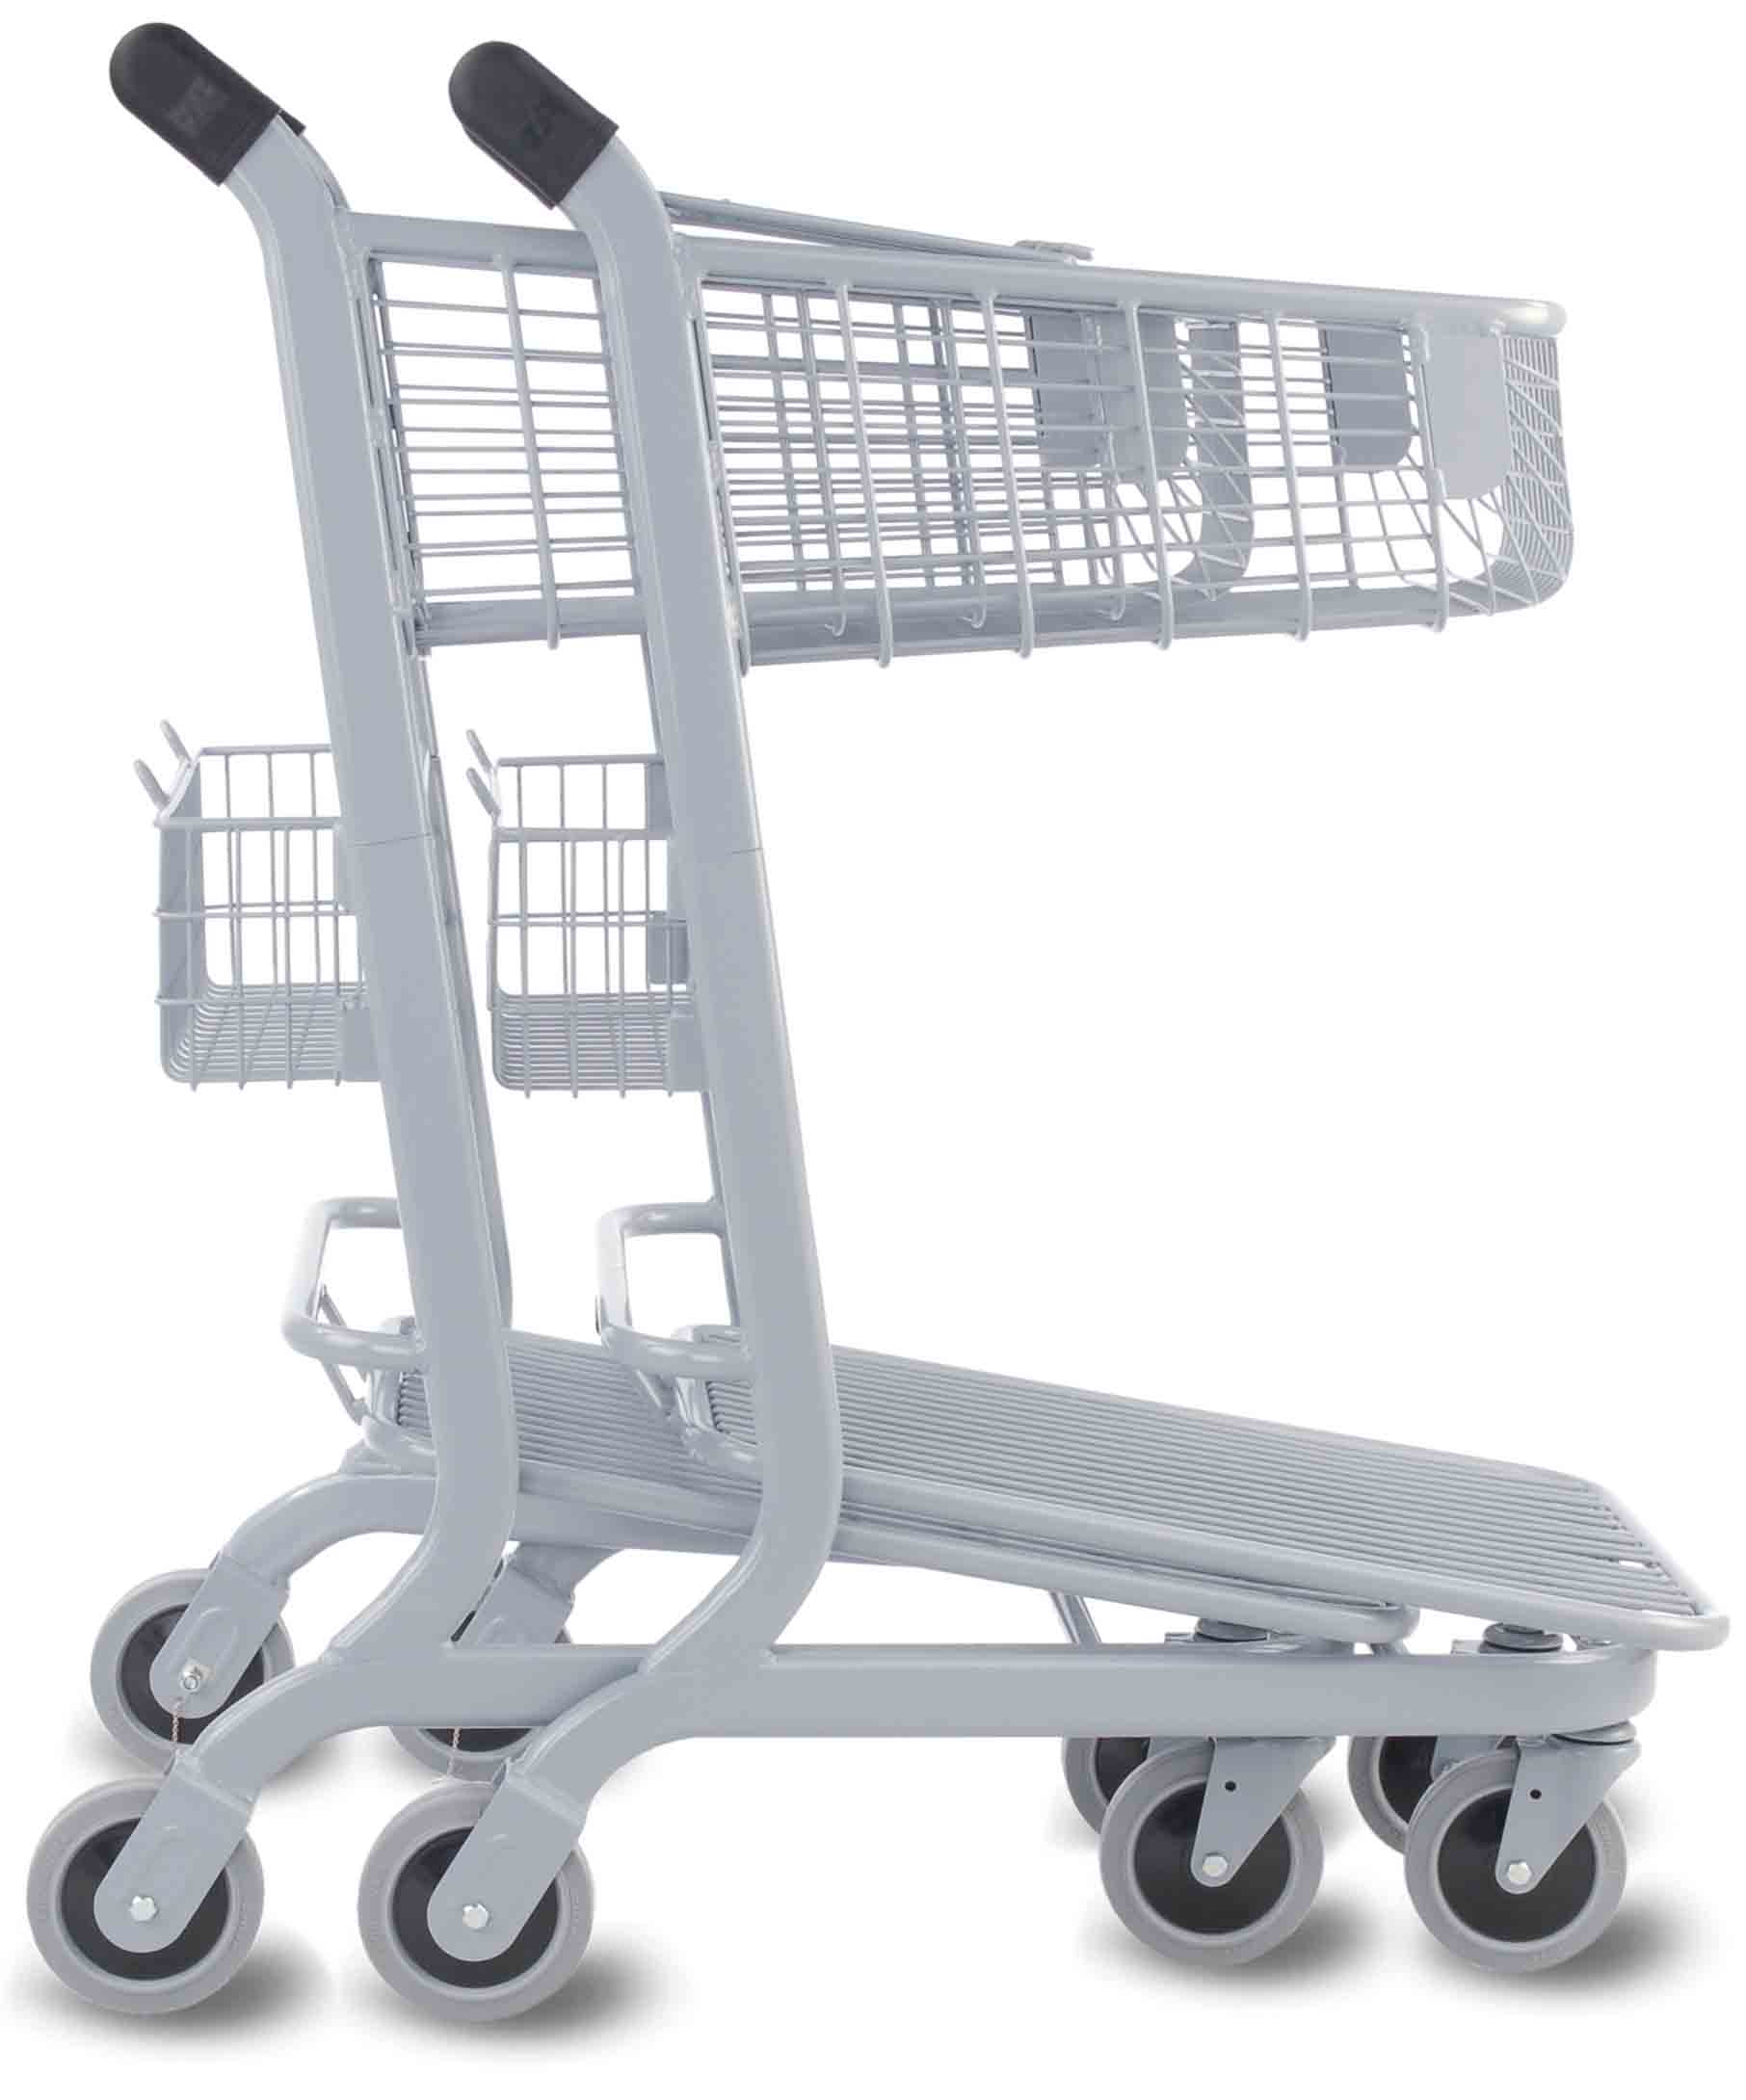 EXpress3500 metal shopping cart nested